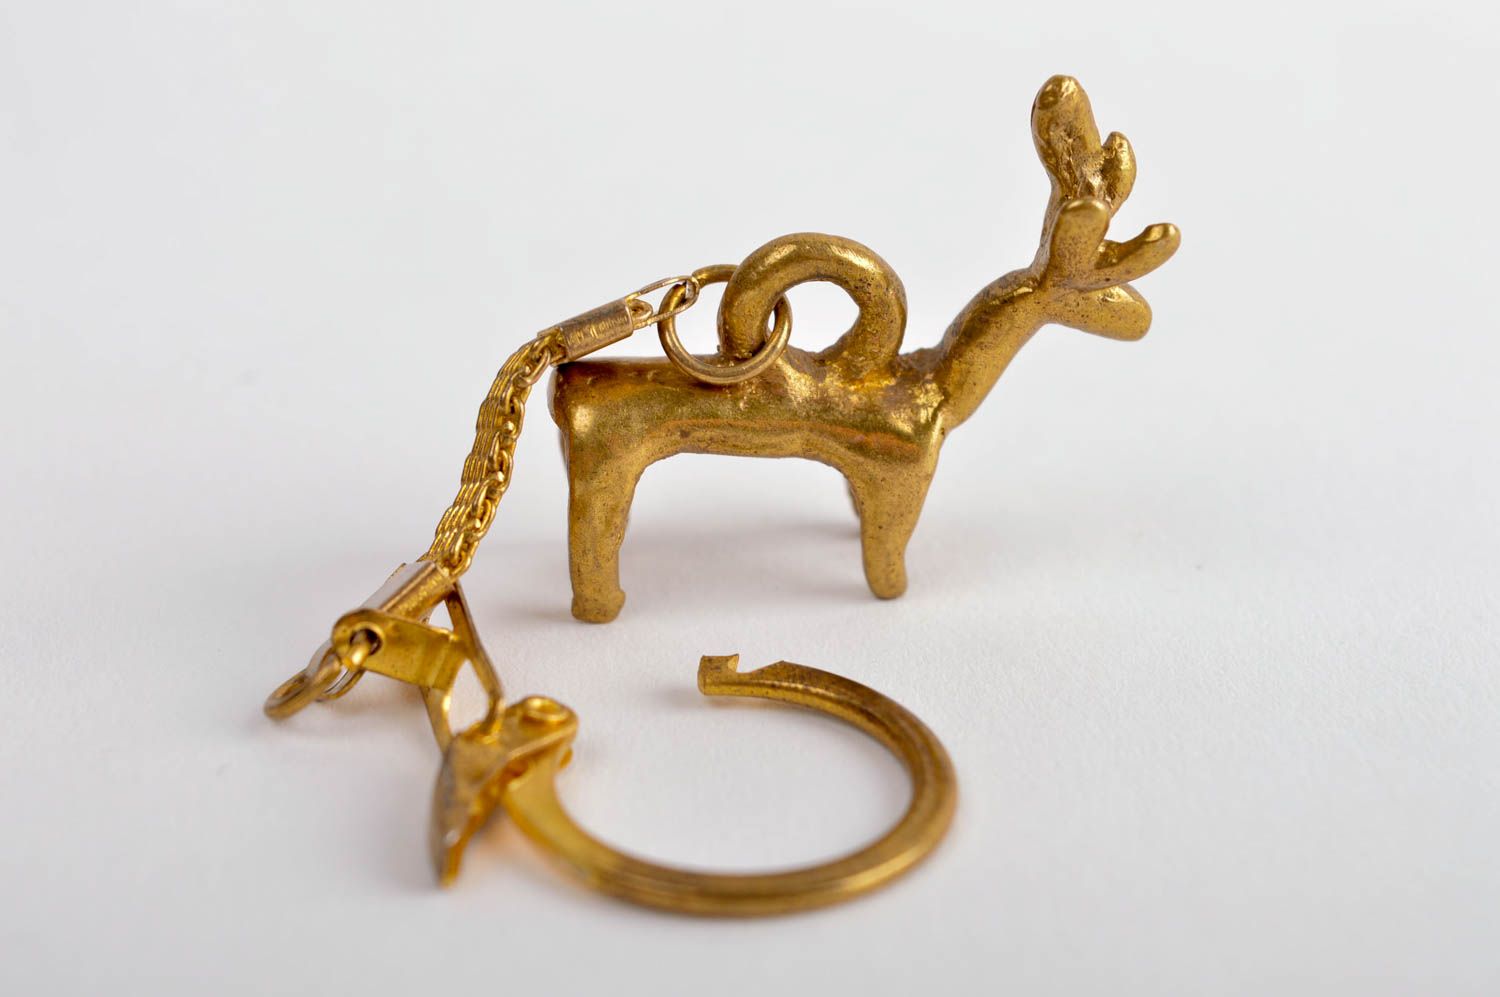 Beautiful handmade metal keychain metal craft fashion accessories gift ideas photo 4